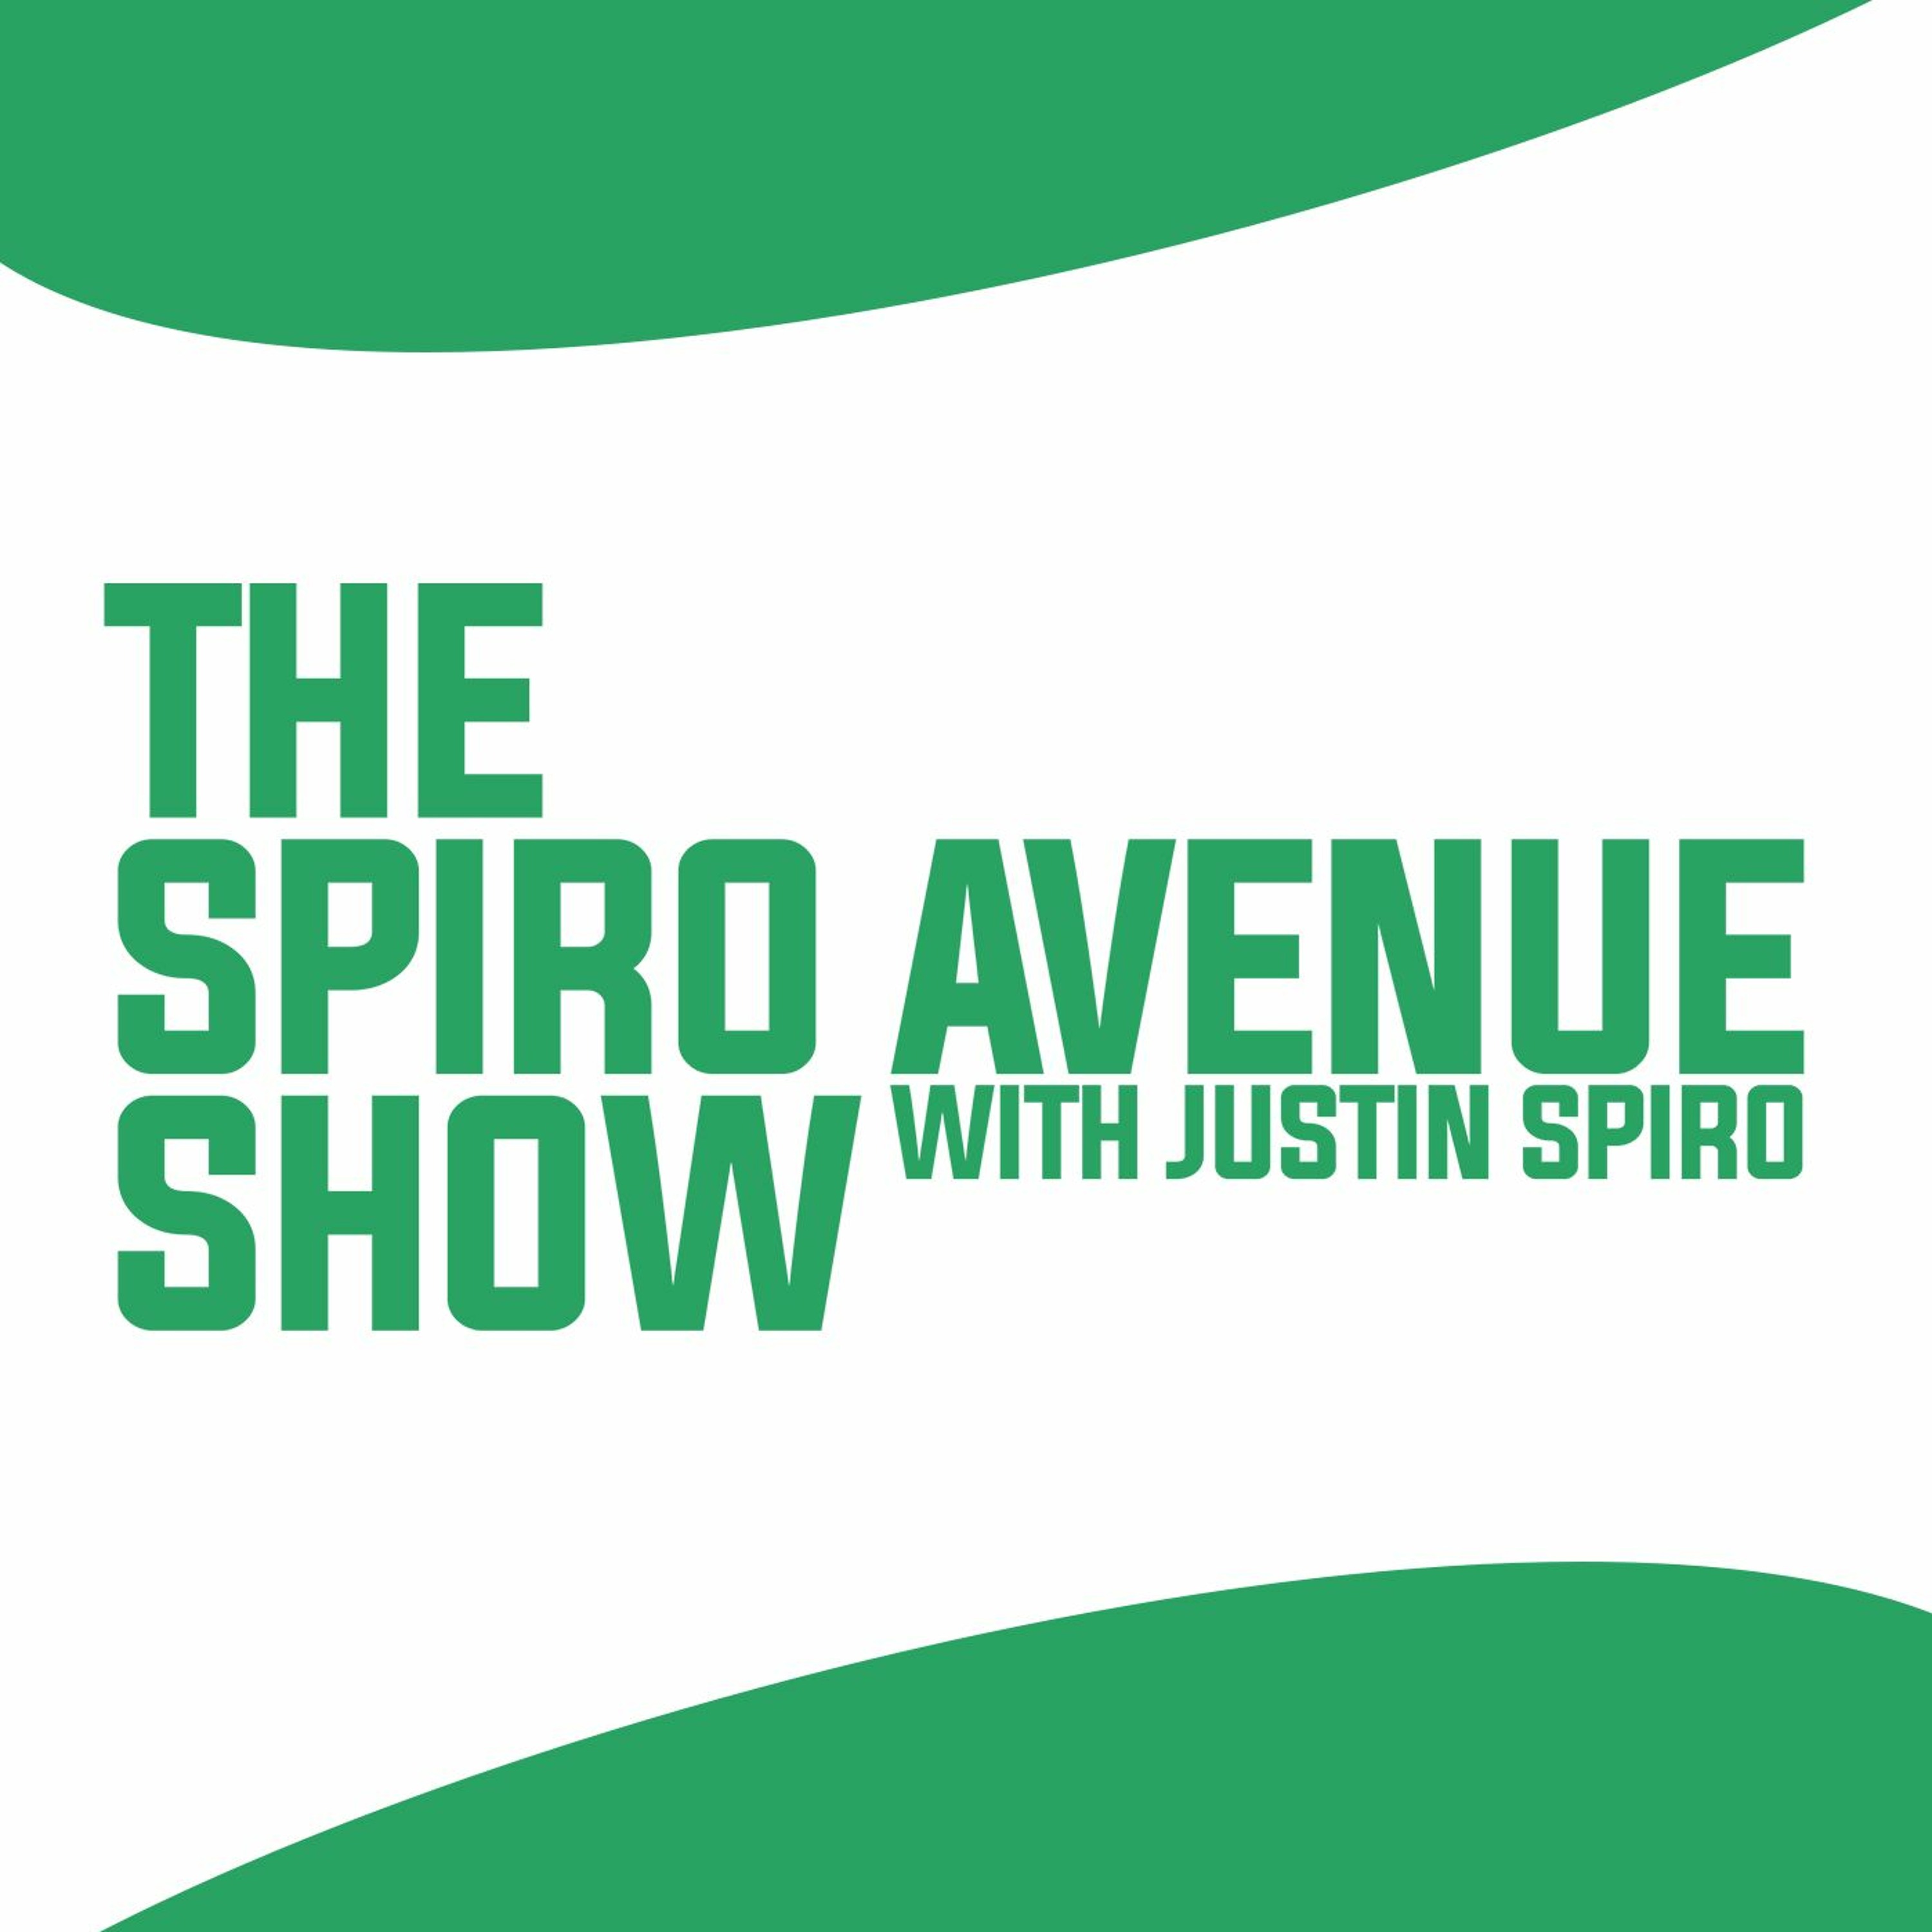 The Spiro Avenue Show #87 - Steven Izzo